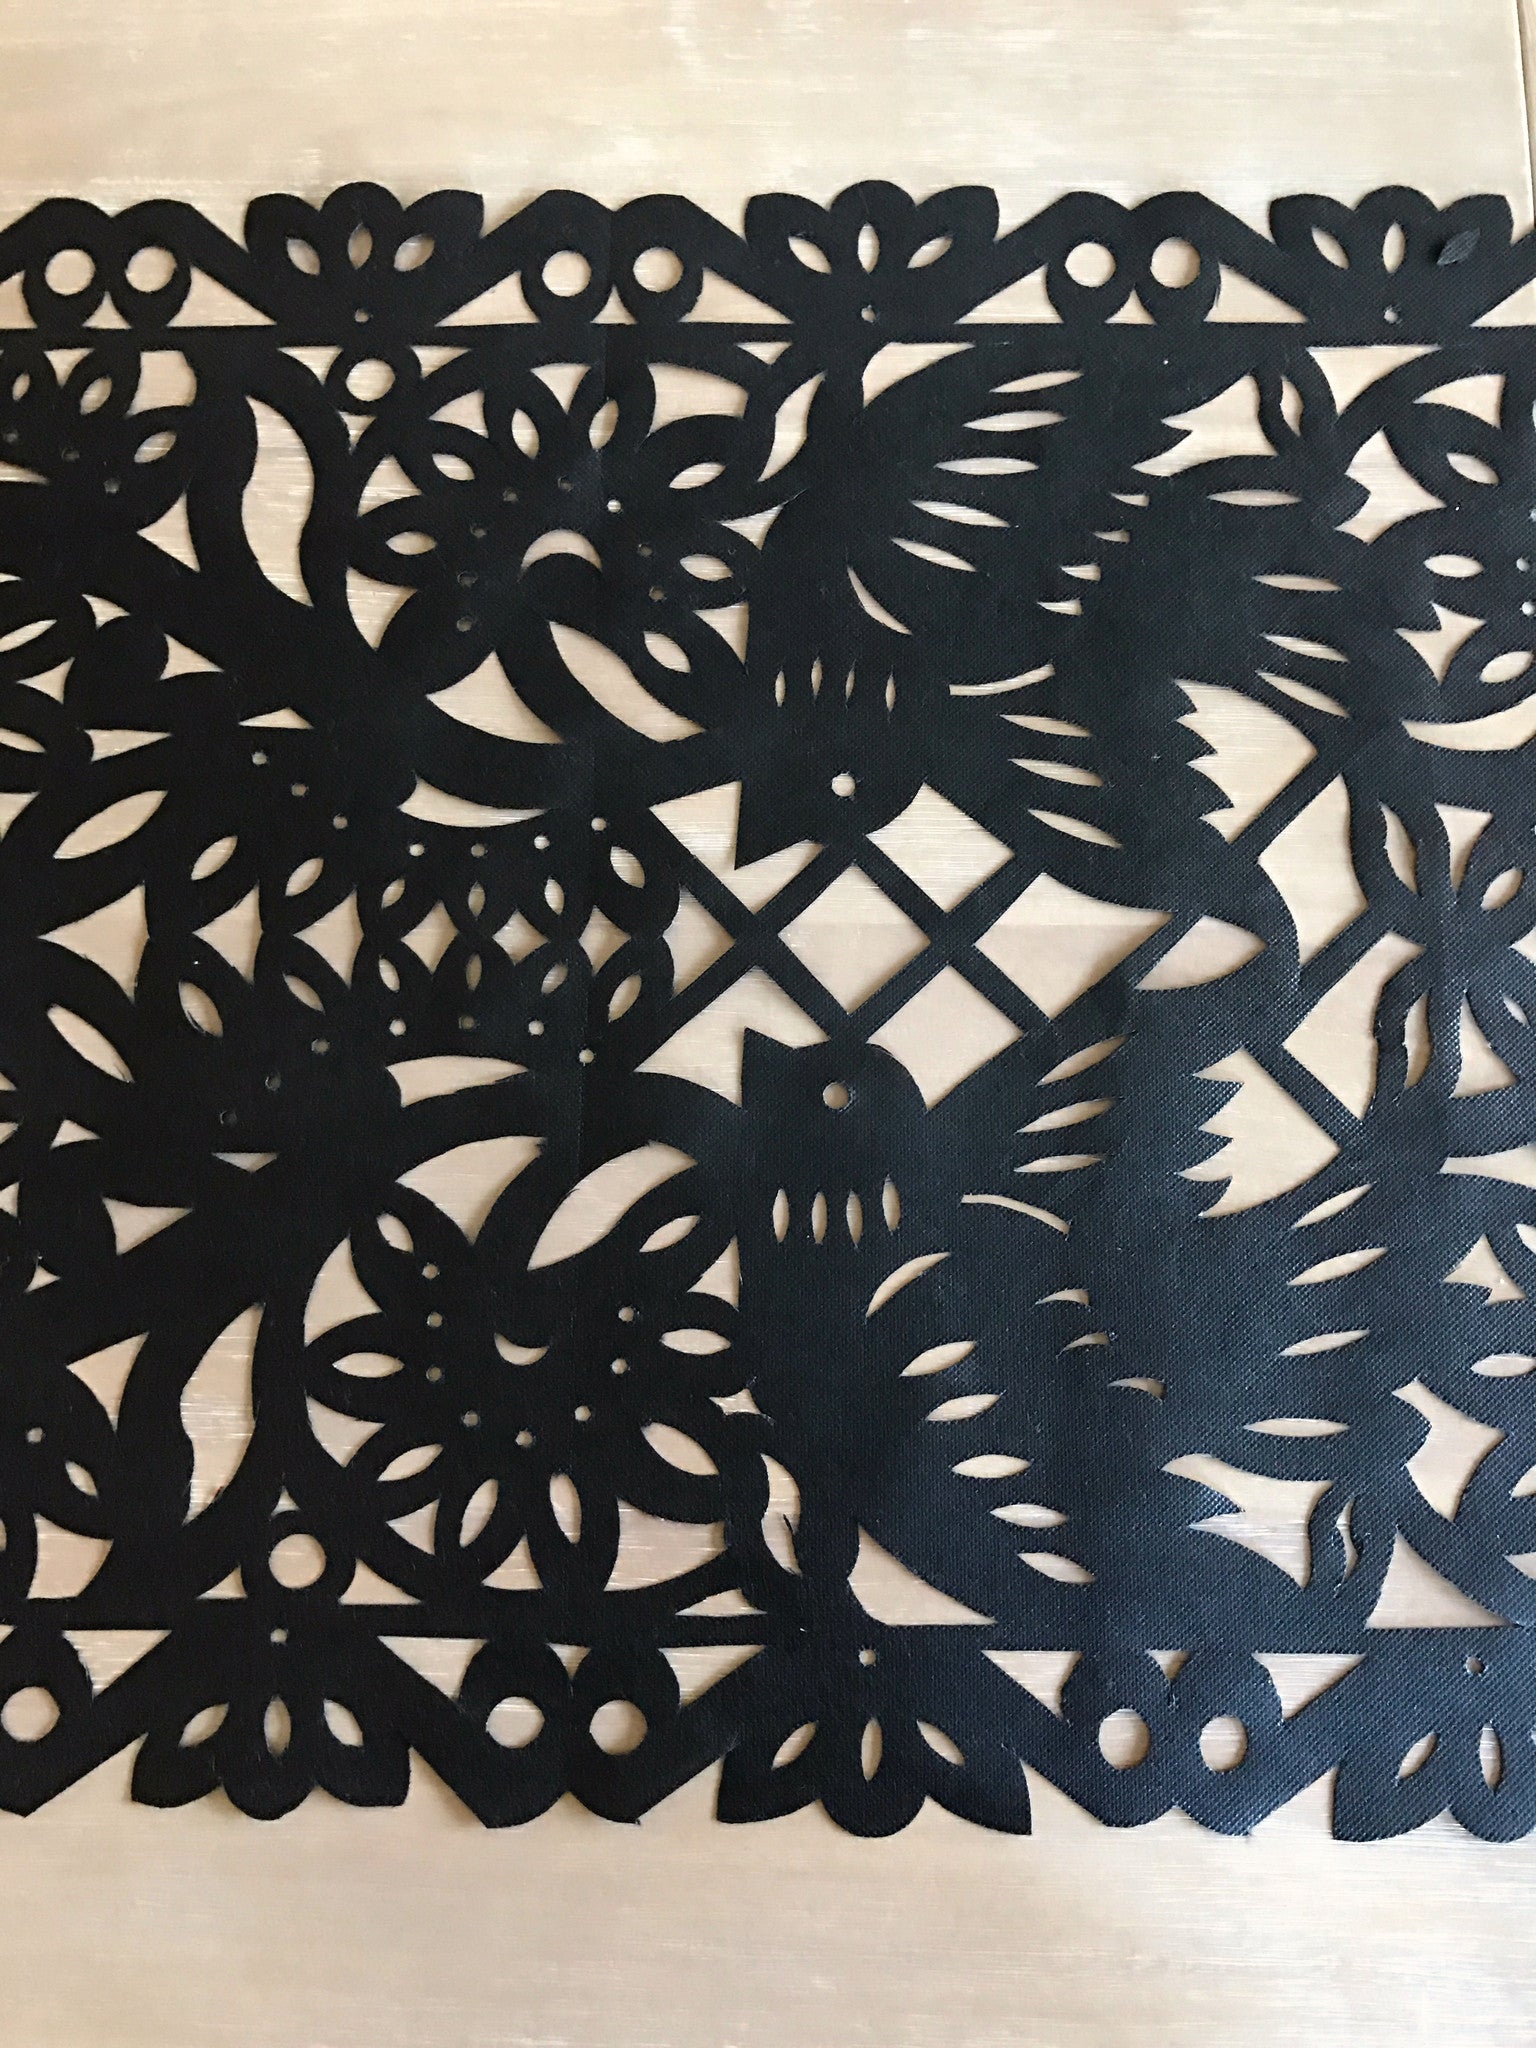 Mexican fabric Table Runner Papel Picado design -Black - MesaChic - 3